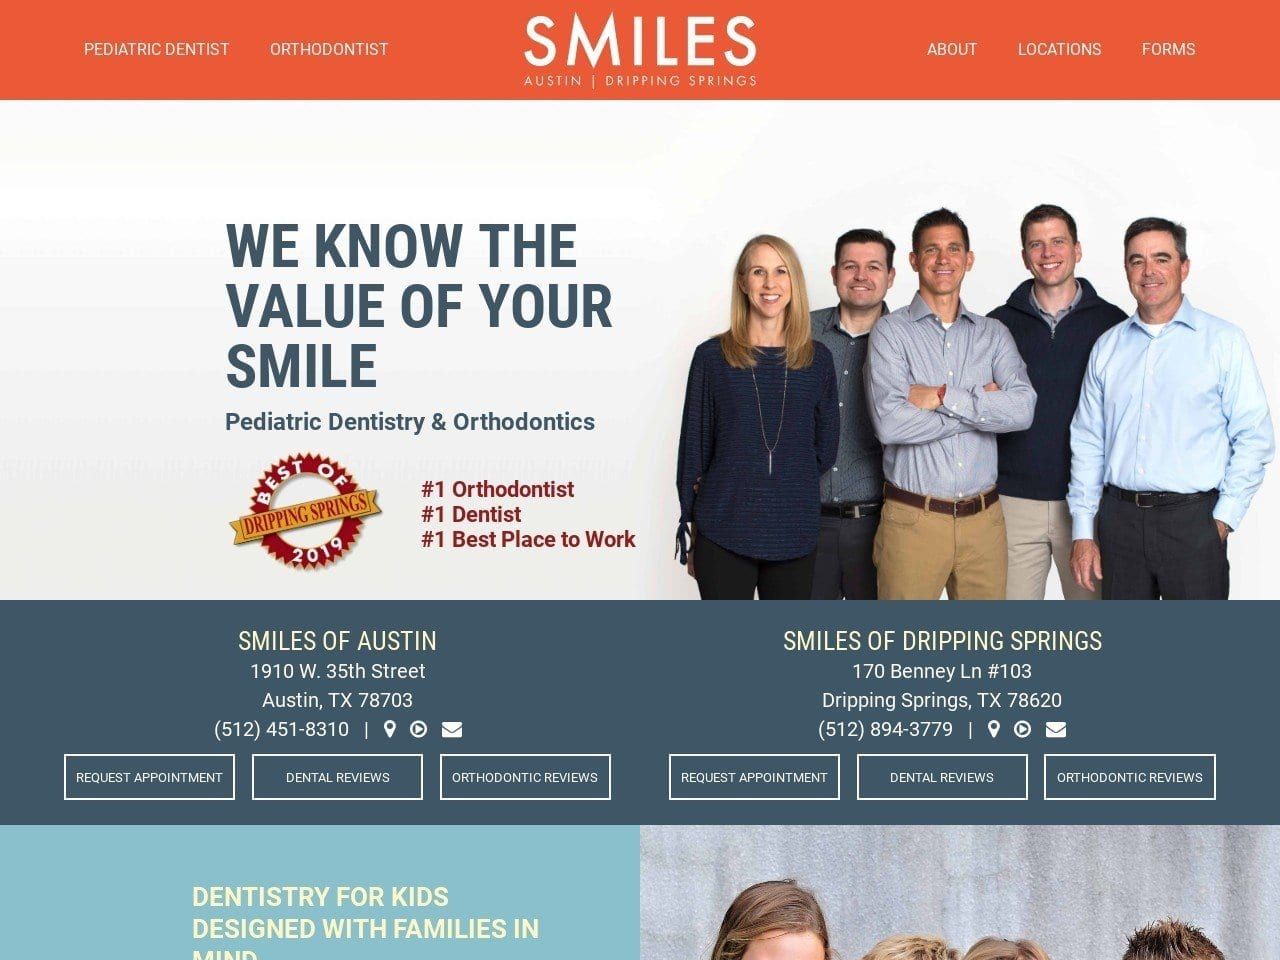 Smiles of Austin Website Screenshot from smilesofaustin.net